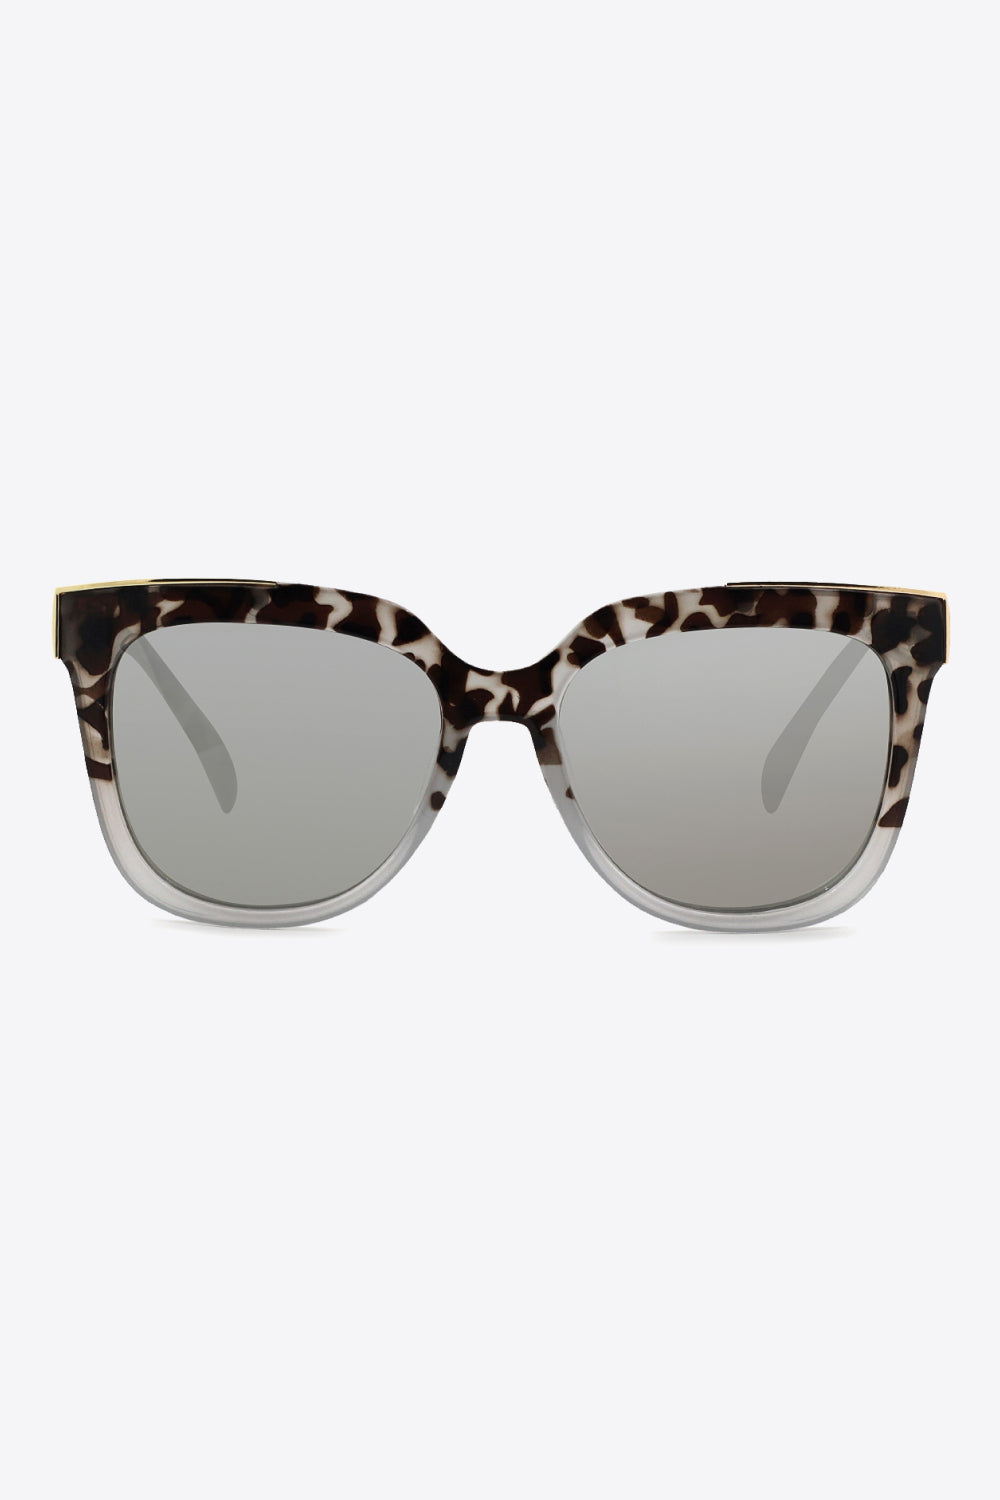 Tortoiseshell Polycarbonate Frame Full Rim Sunglasses Light Gray One Size Sunglasses by Vim&Vigor | Vim&Vigor Boutique